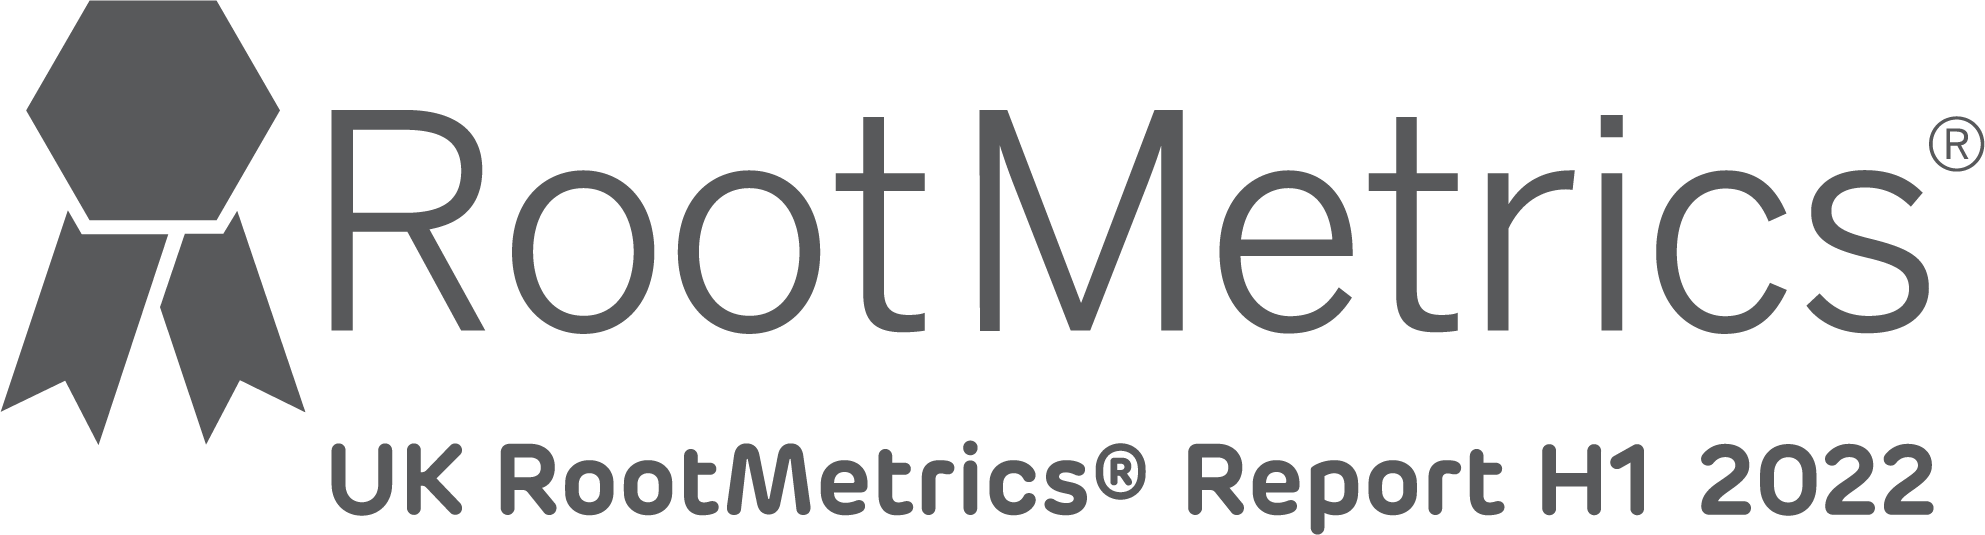 Rootmetrics logo